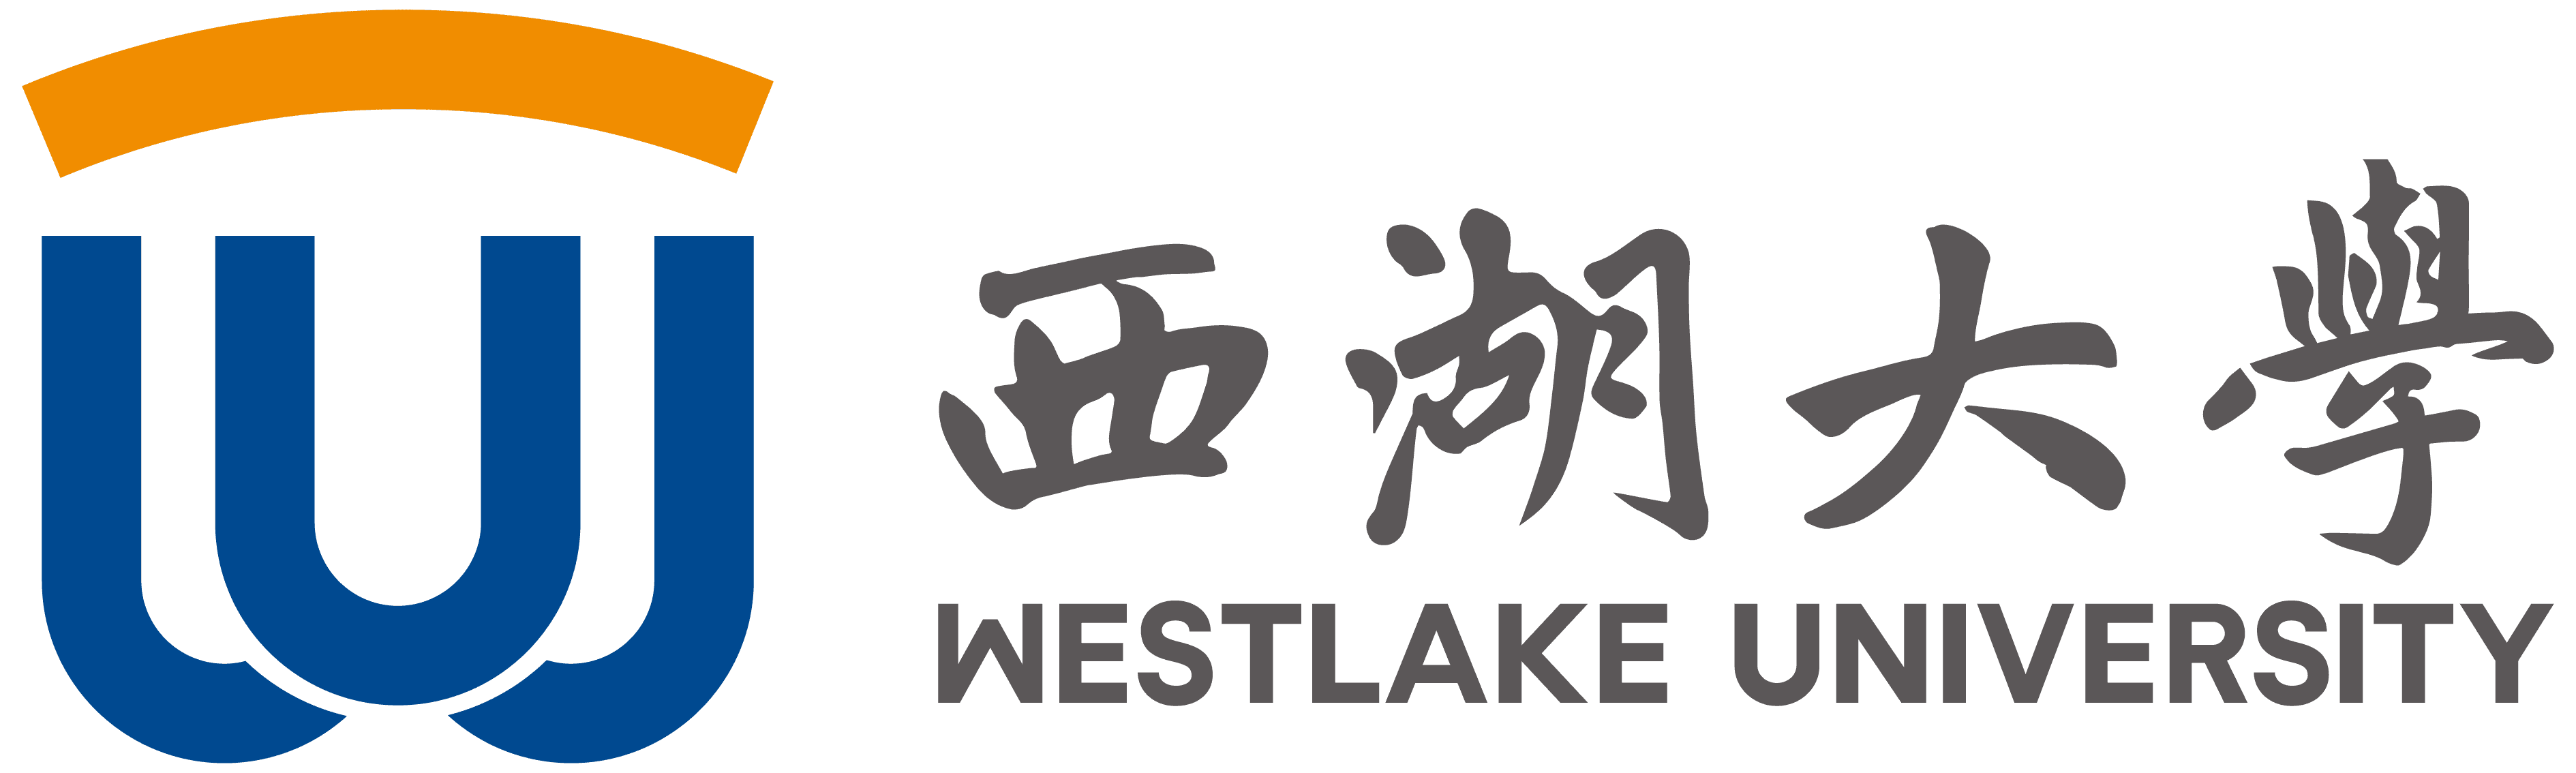 Westlake University